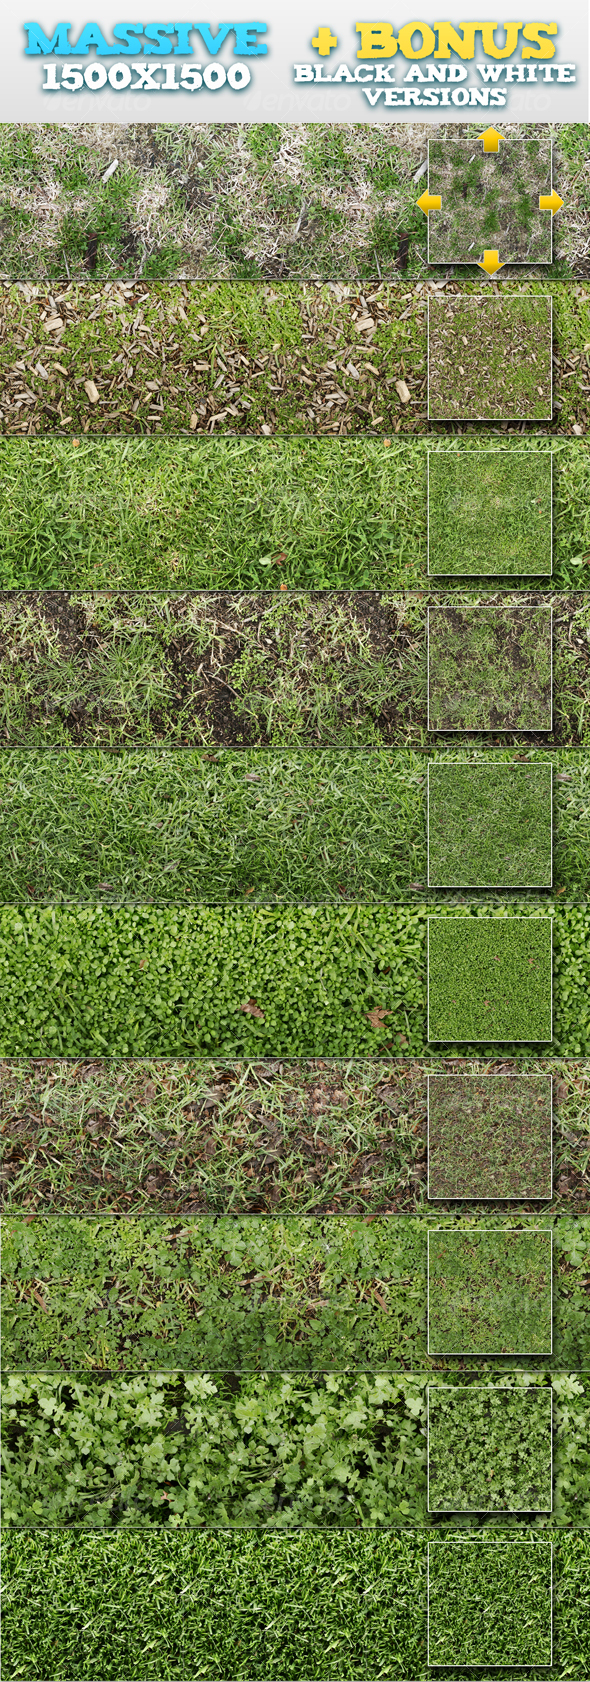 10 Tileable Grass Patterns + BONUSES